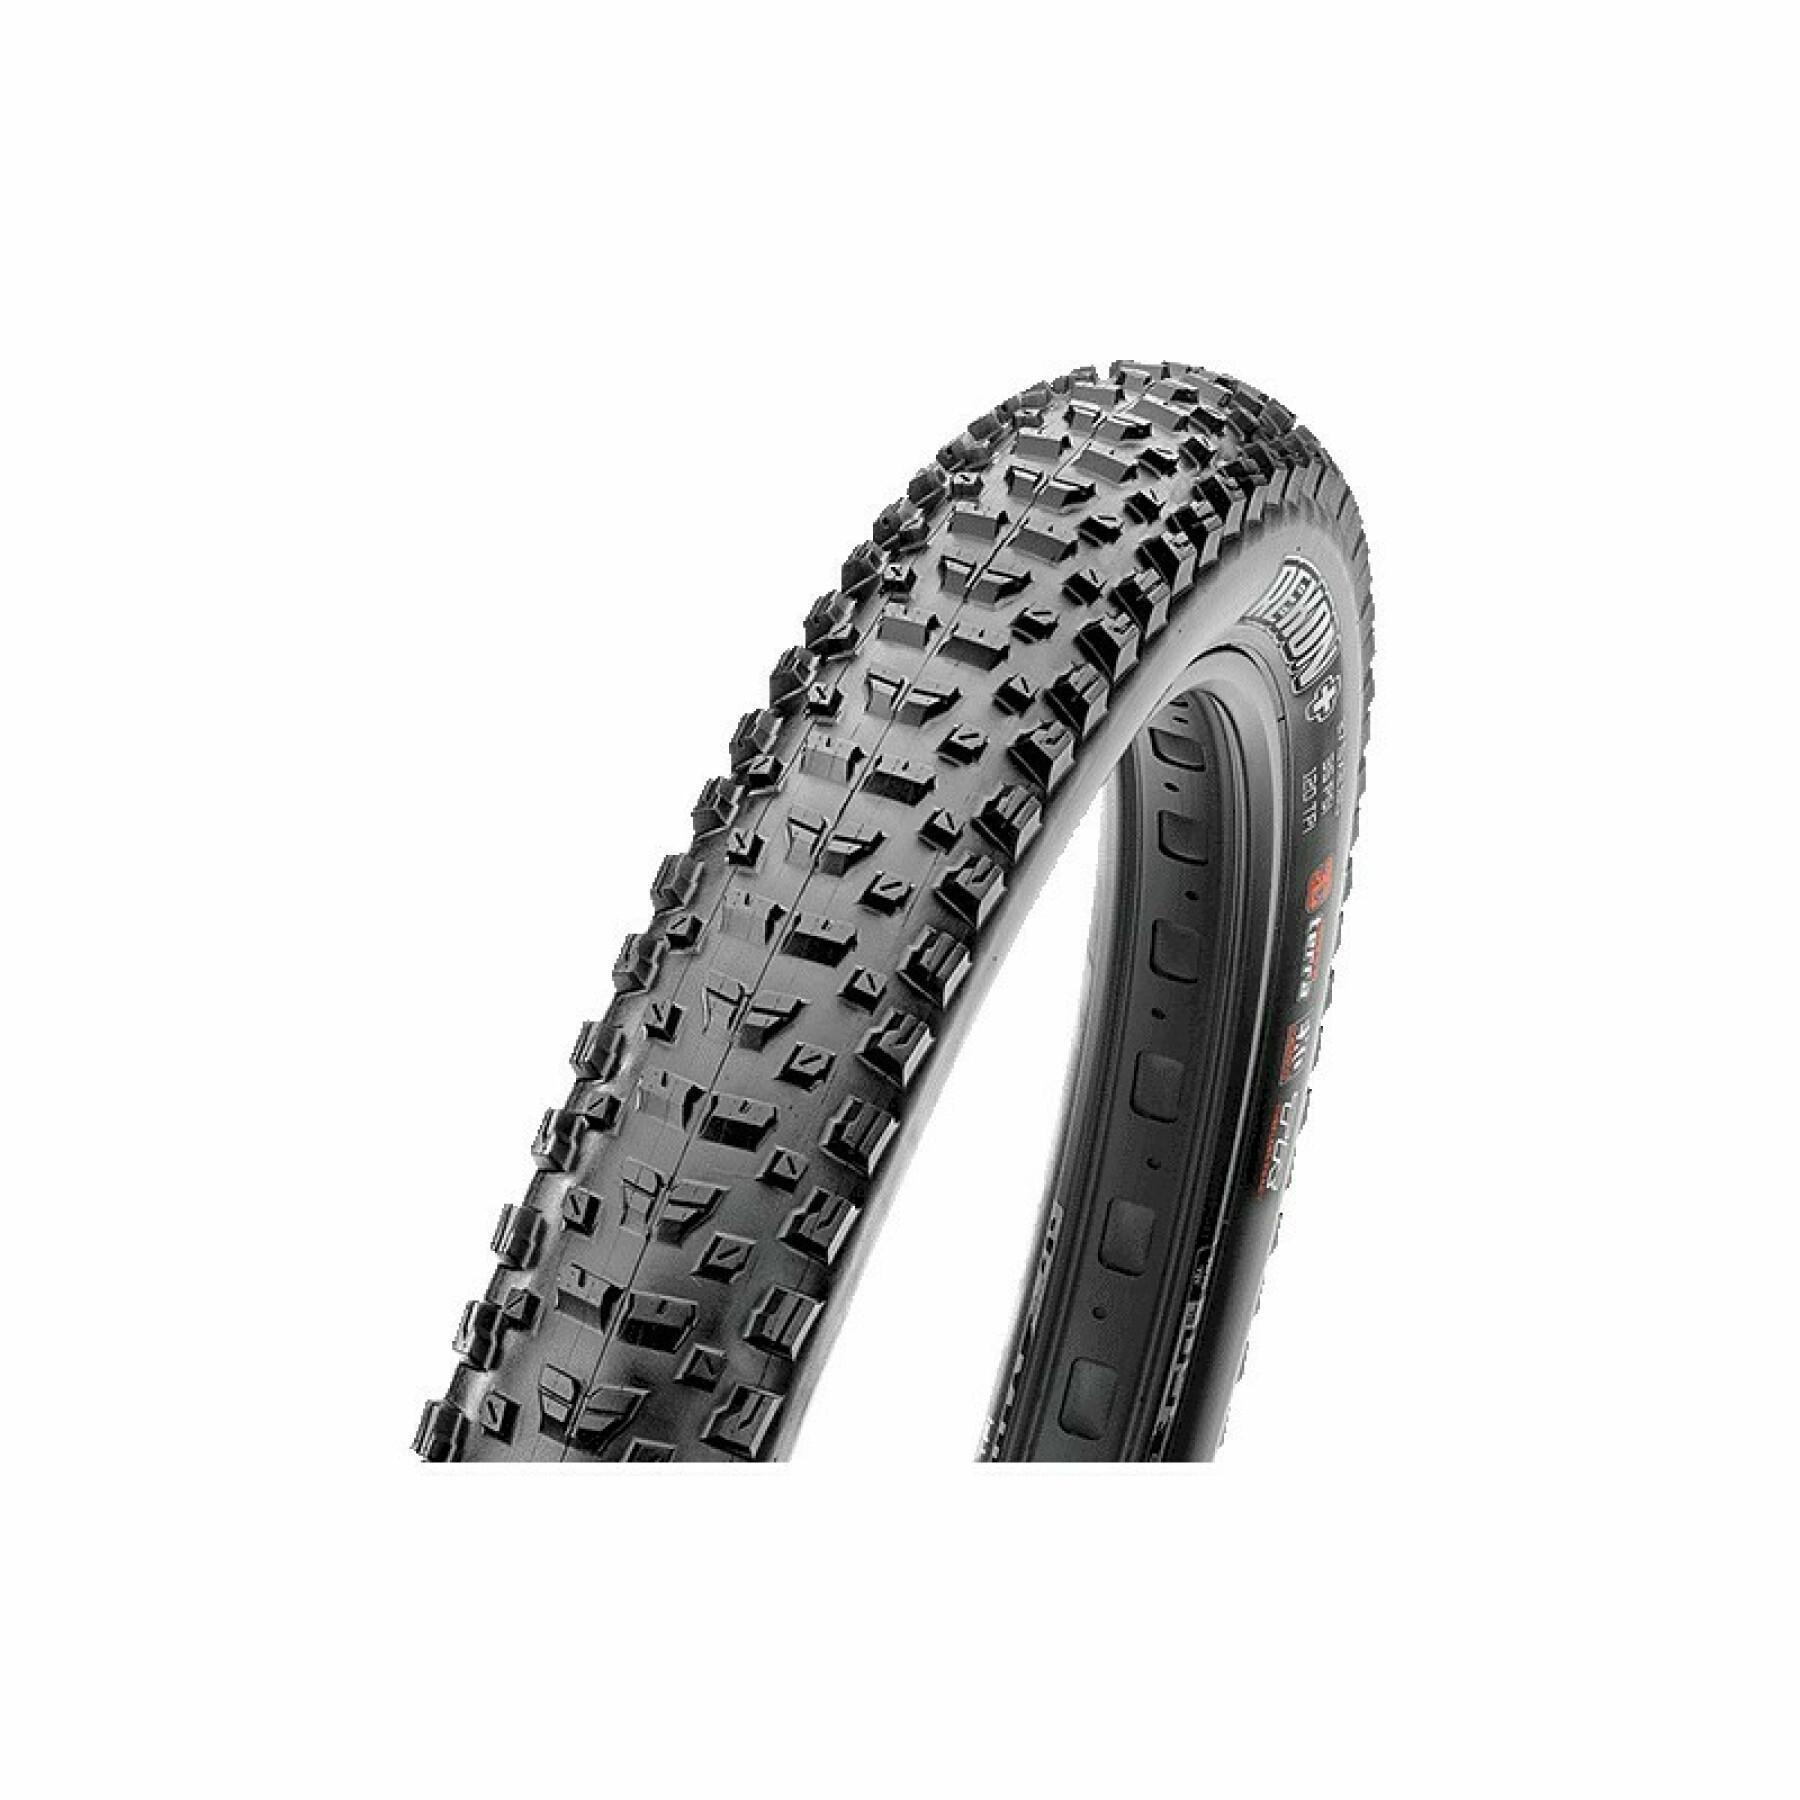 Soft tire Maxxis Rekon+ 27.5x2.80 Exo / Tubeless Ready